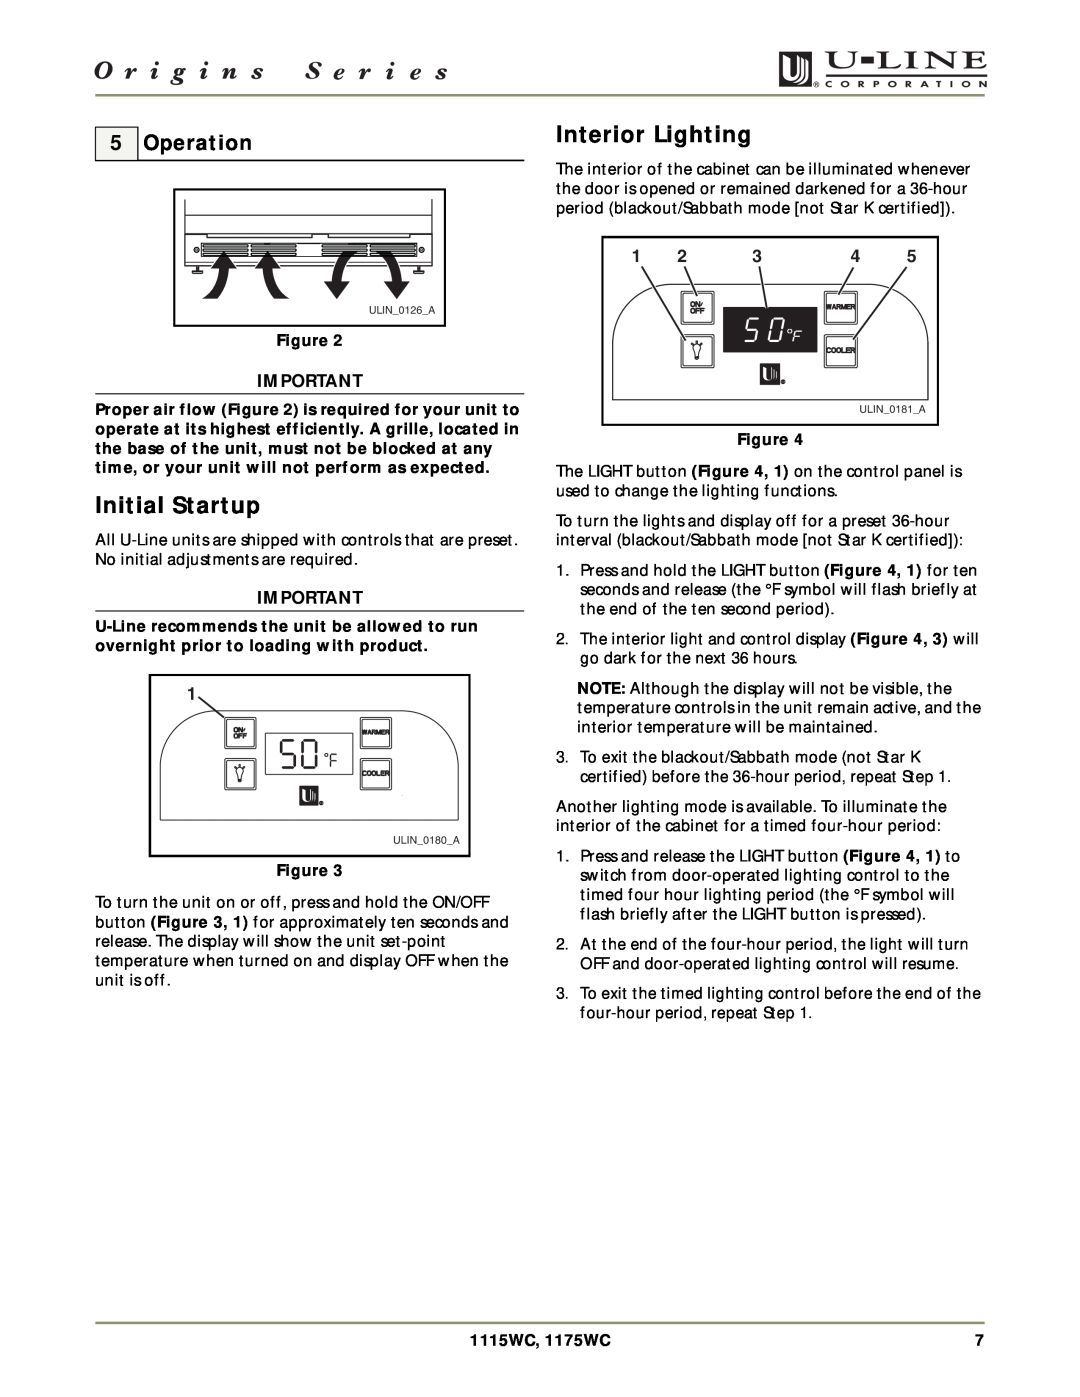 U-Line manual Initial Startup, Interior Lighting, Operation, 1115WC, 1175WC 